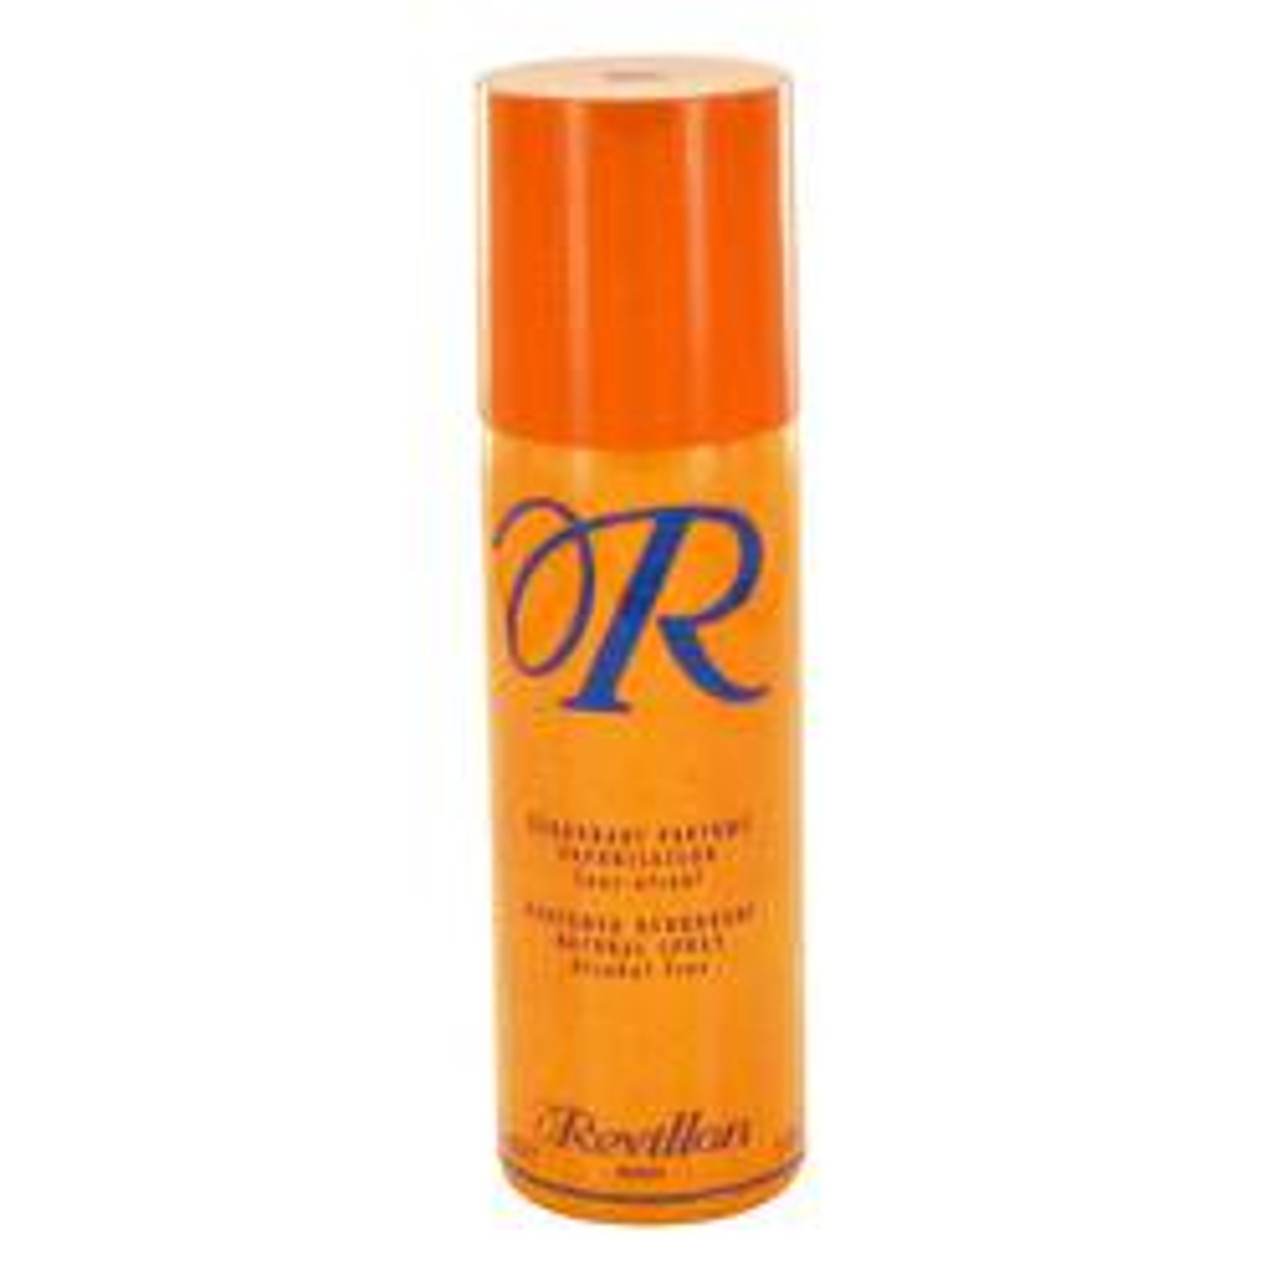 R De Revillon Cologne By Revillon Deodorant Spray 5 oz for Men - [From 19.00 - Choose pk Qty ] - *Ships from Miami